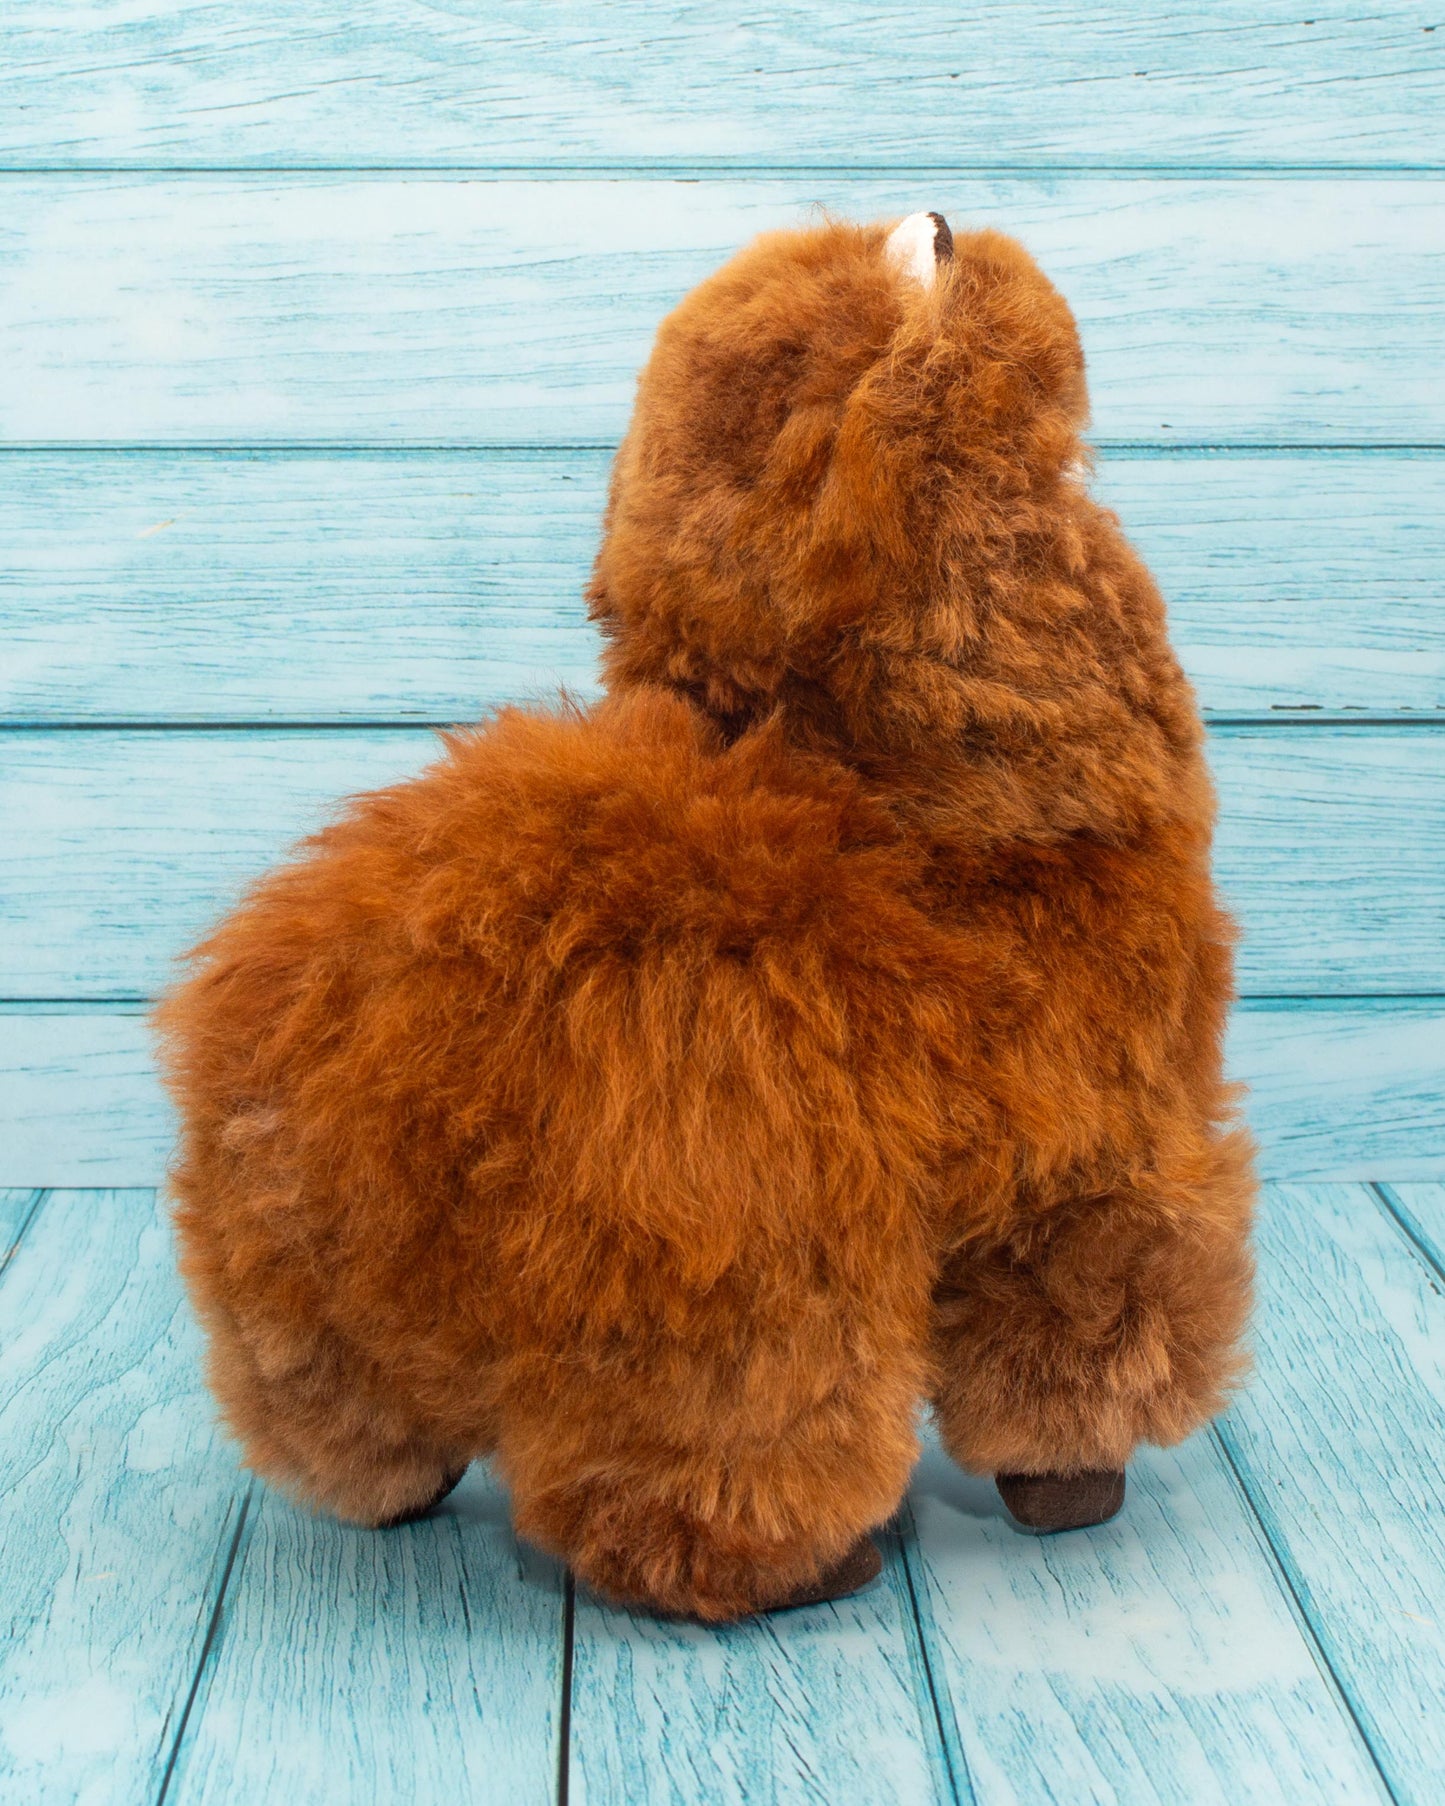 Soft alpaca stuffed animal. Beige, 9 inches. Running towards you